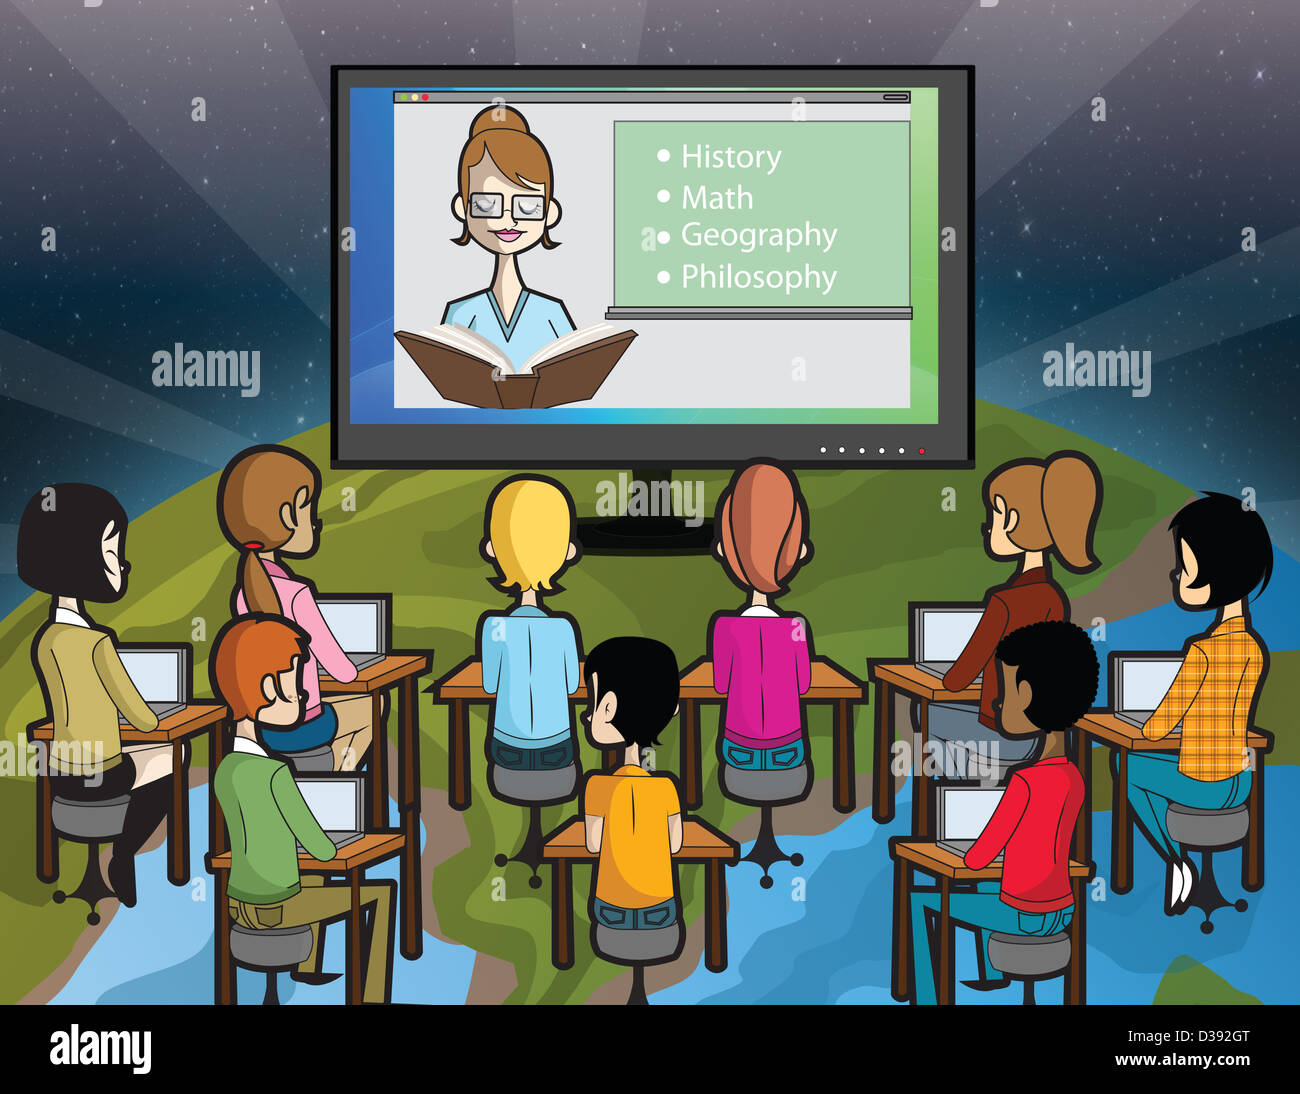 Online education Stock Photo